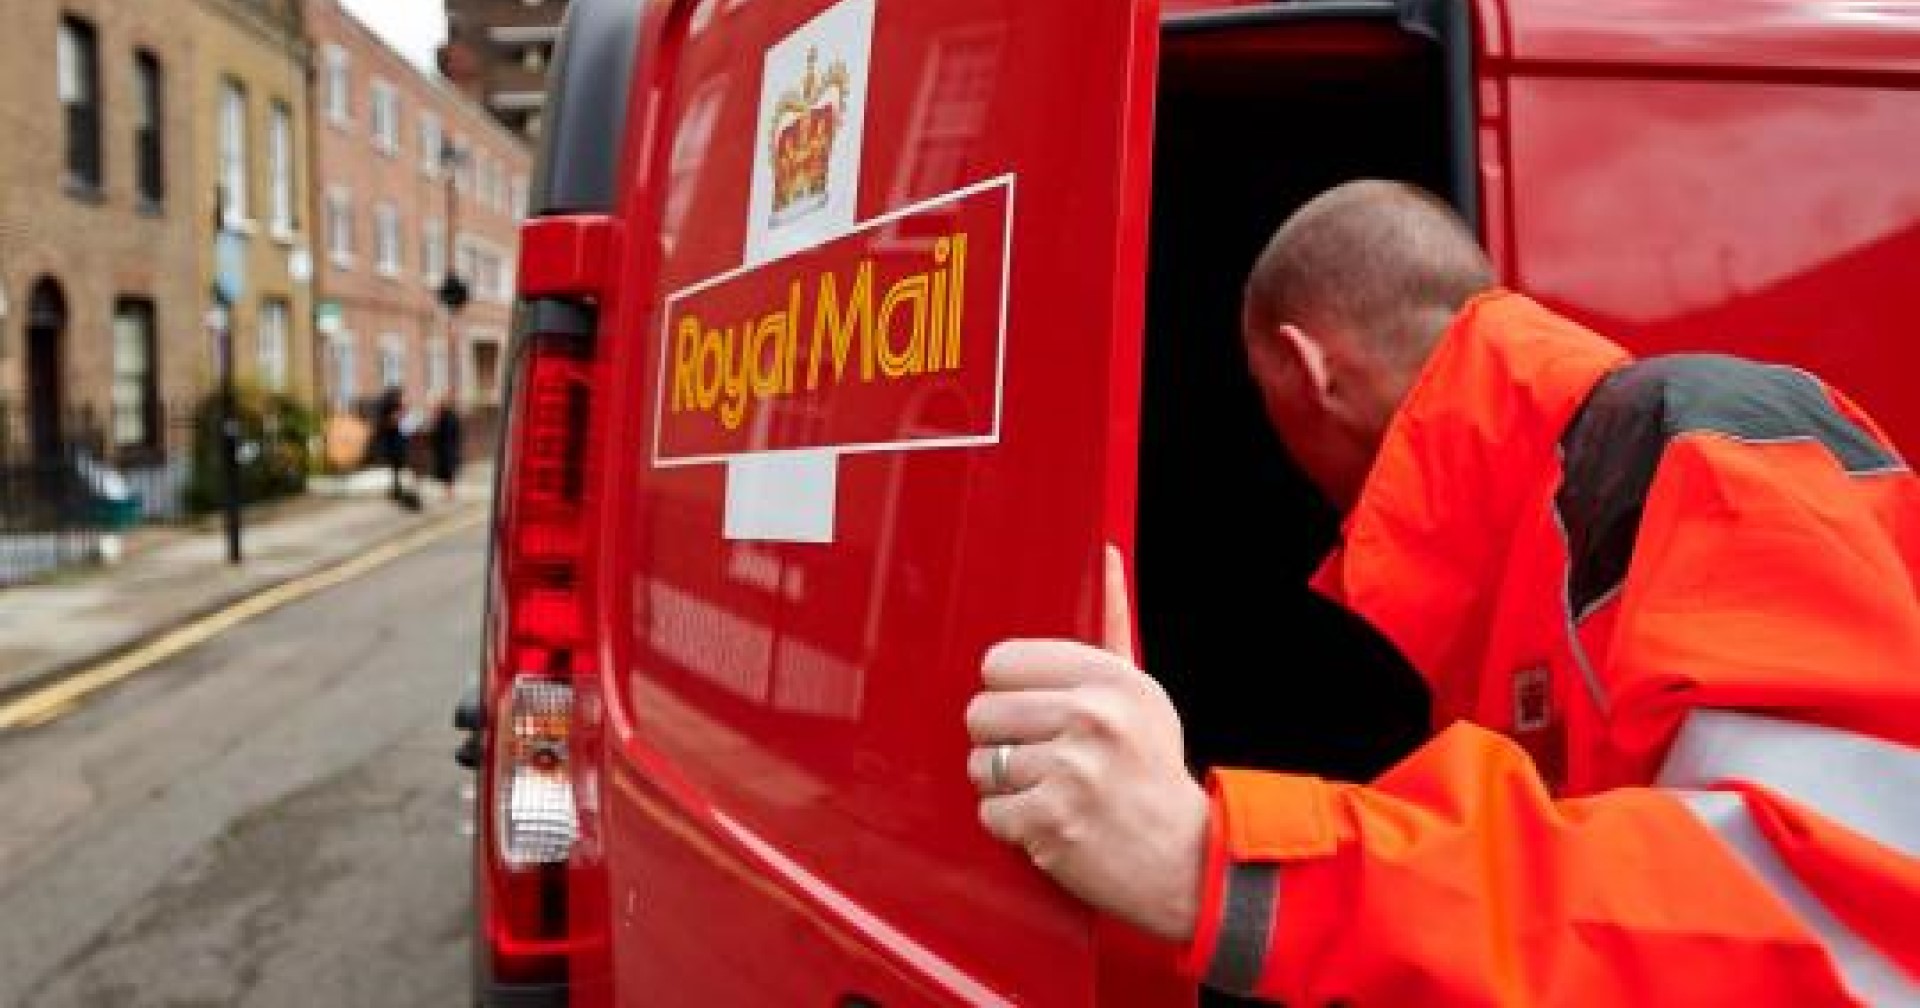 Royal Mail ปฏิเสธจ่ายค่าไถ่ให้แฮกเกอร์จากรัสเซีย